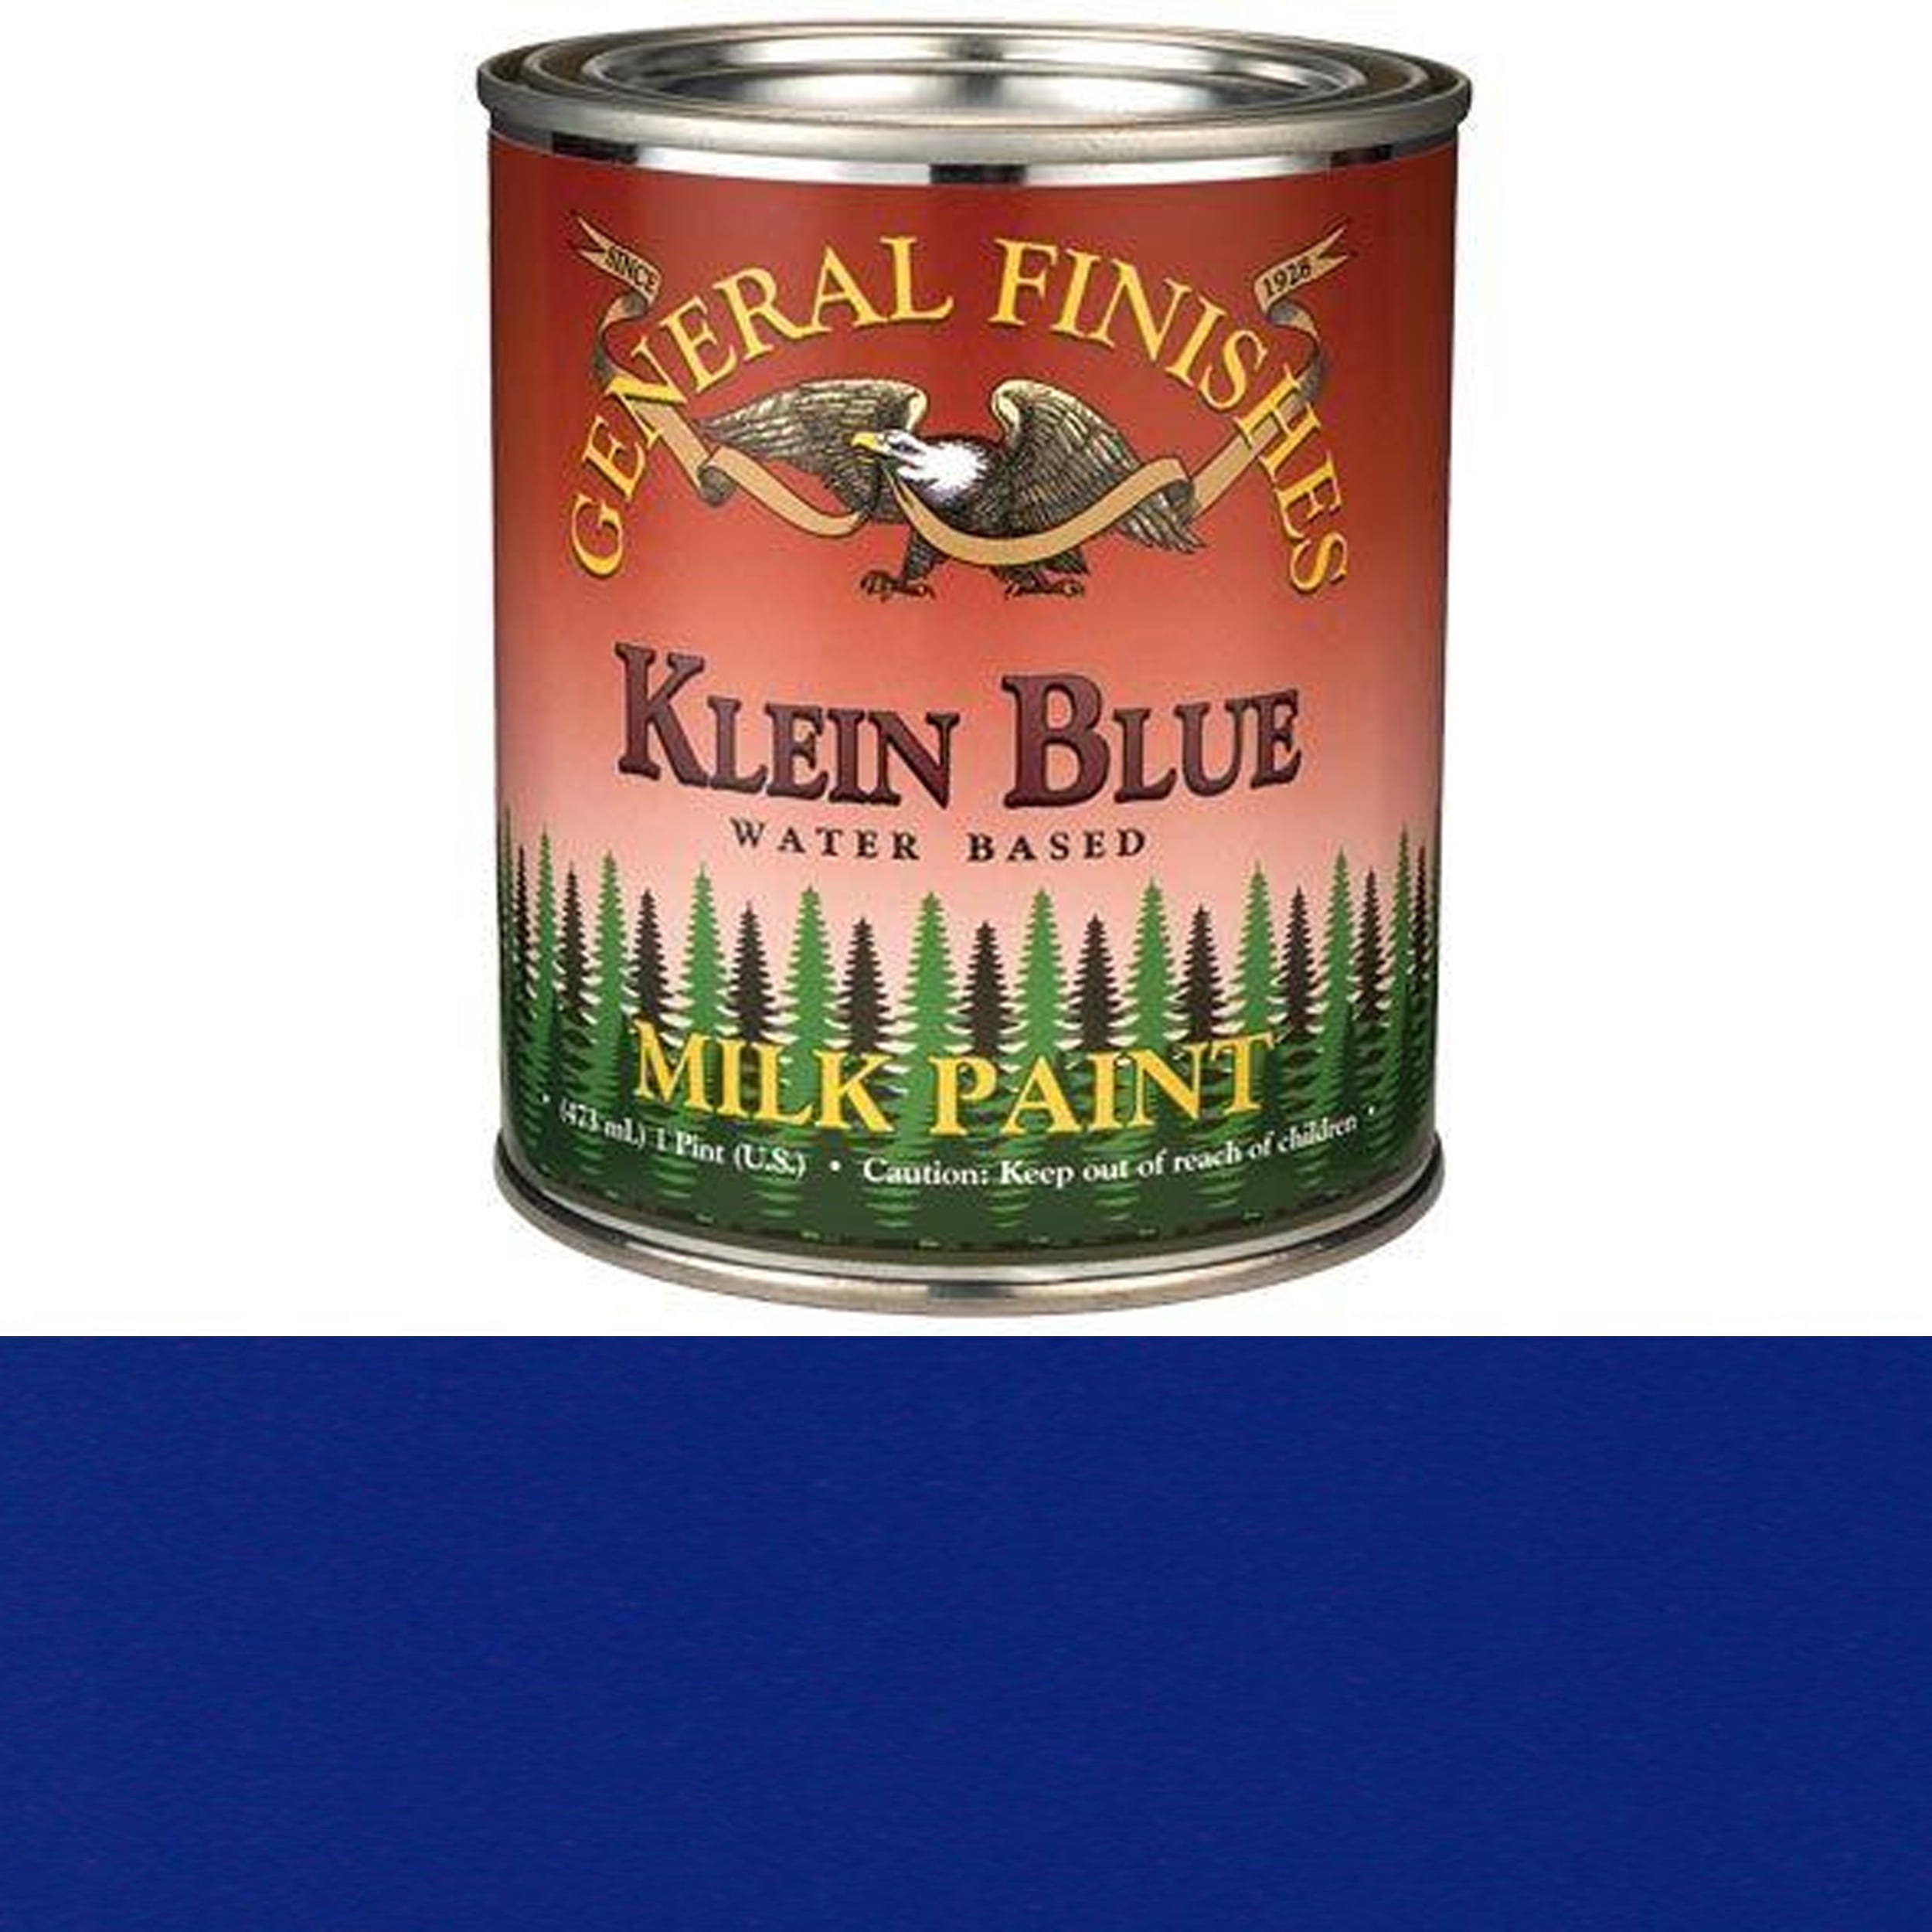 General Finishes Klein Blue Milk Paint